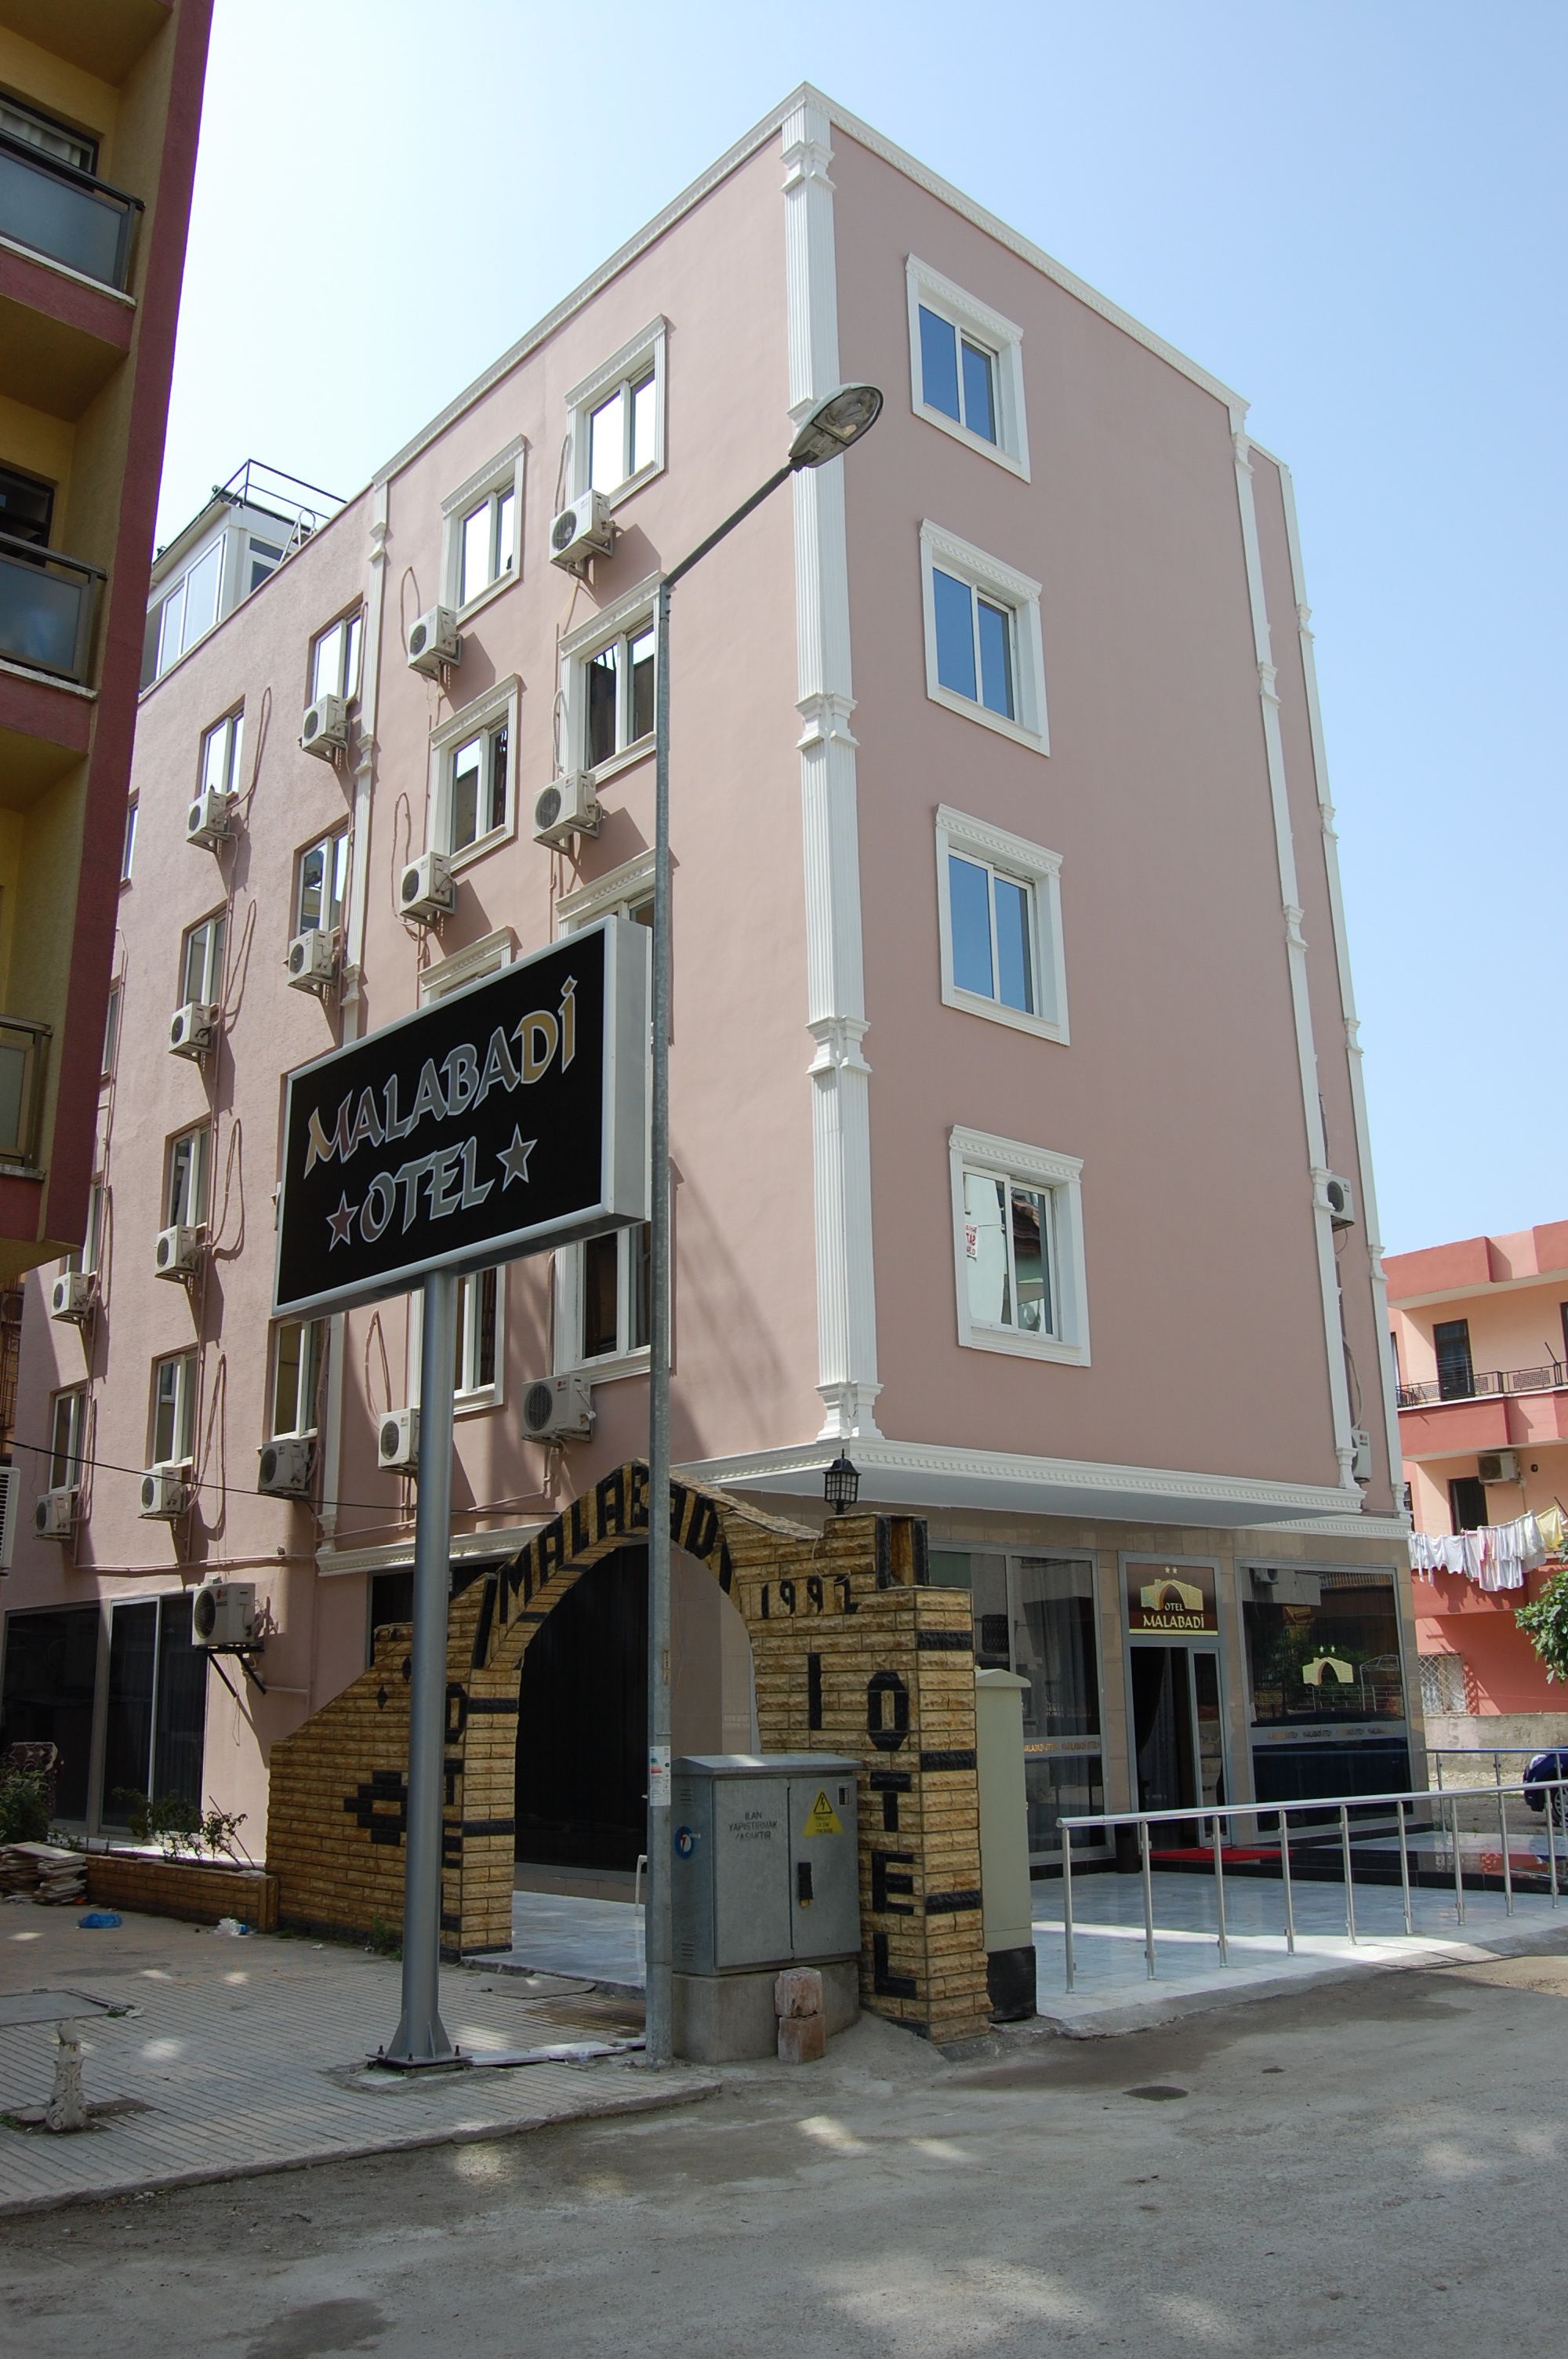 Malabadi Hotel